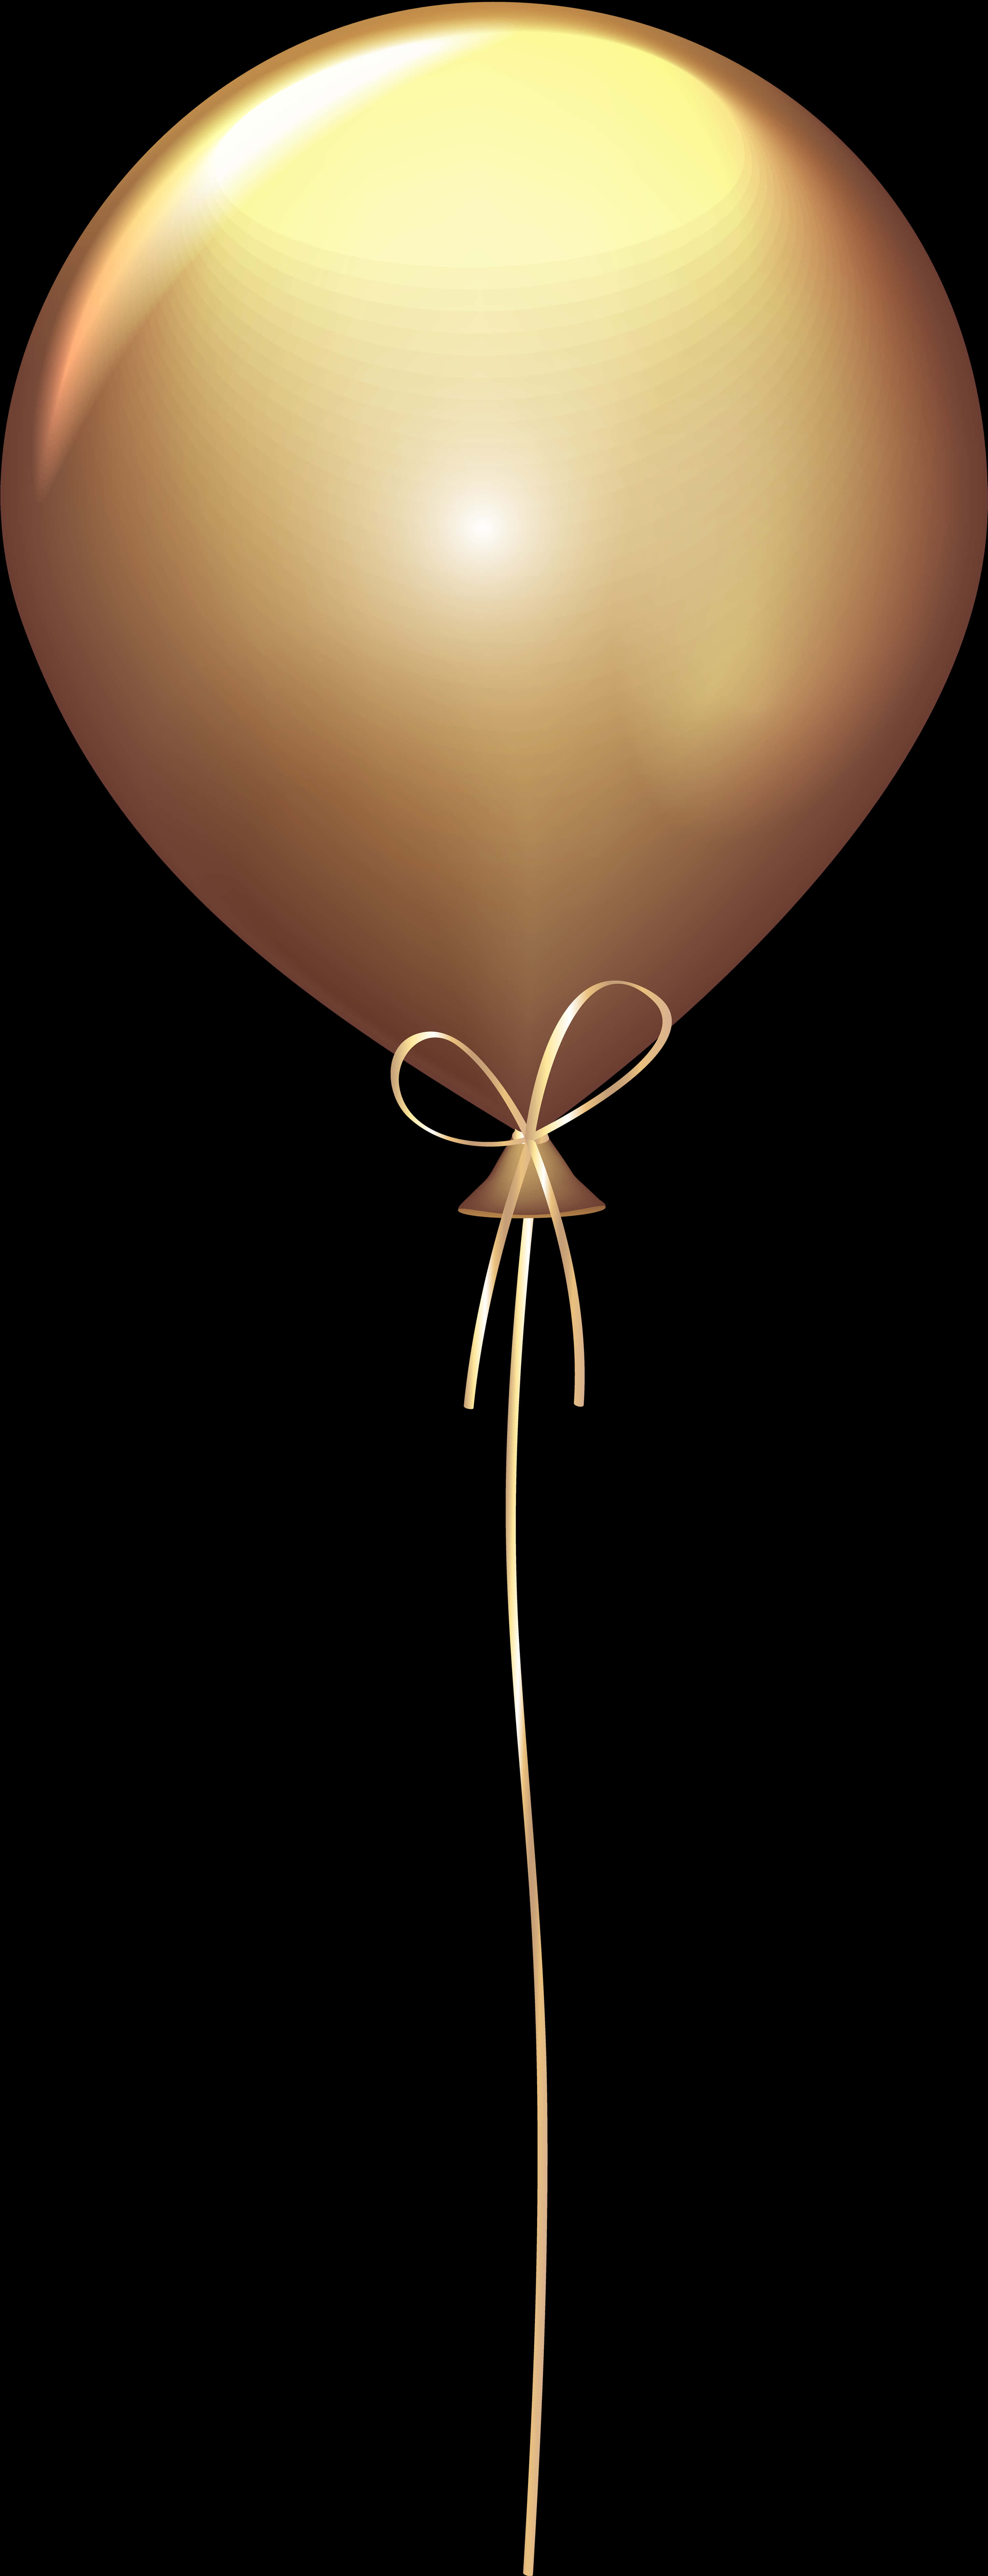 Golden Balloon Transparent Background